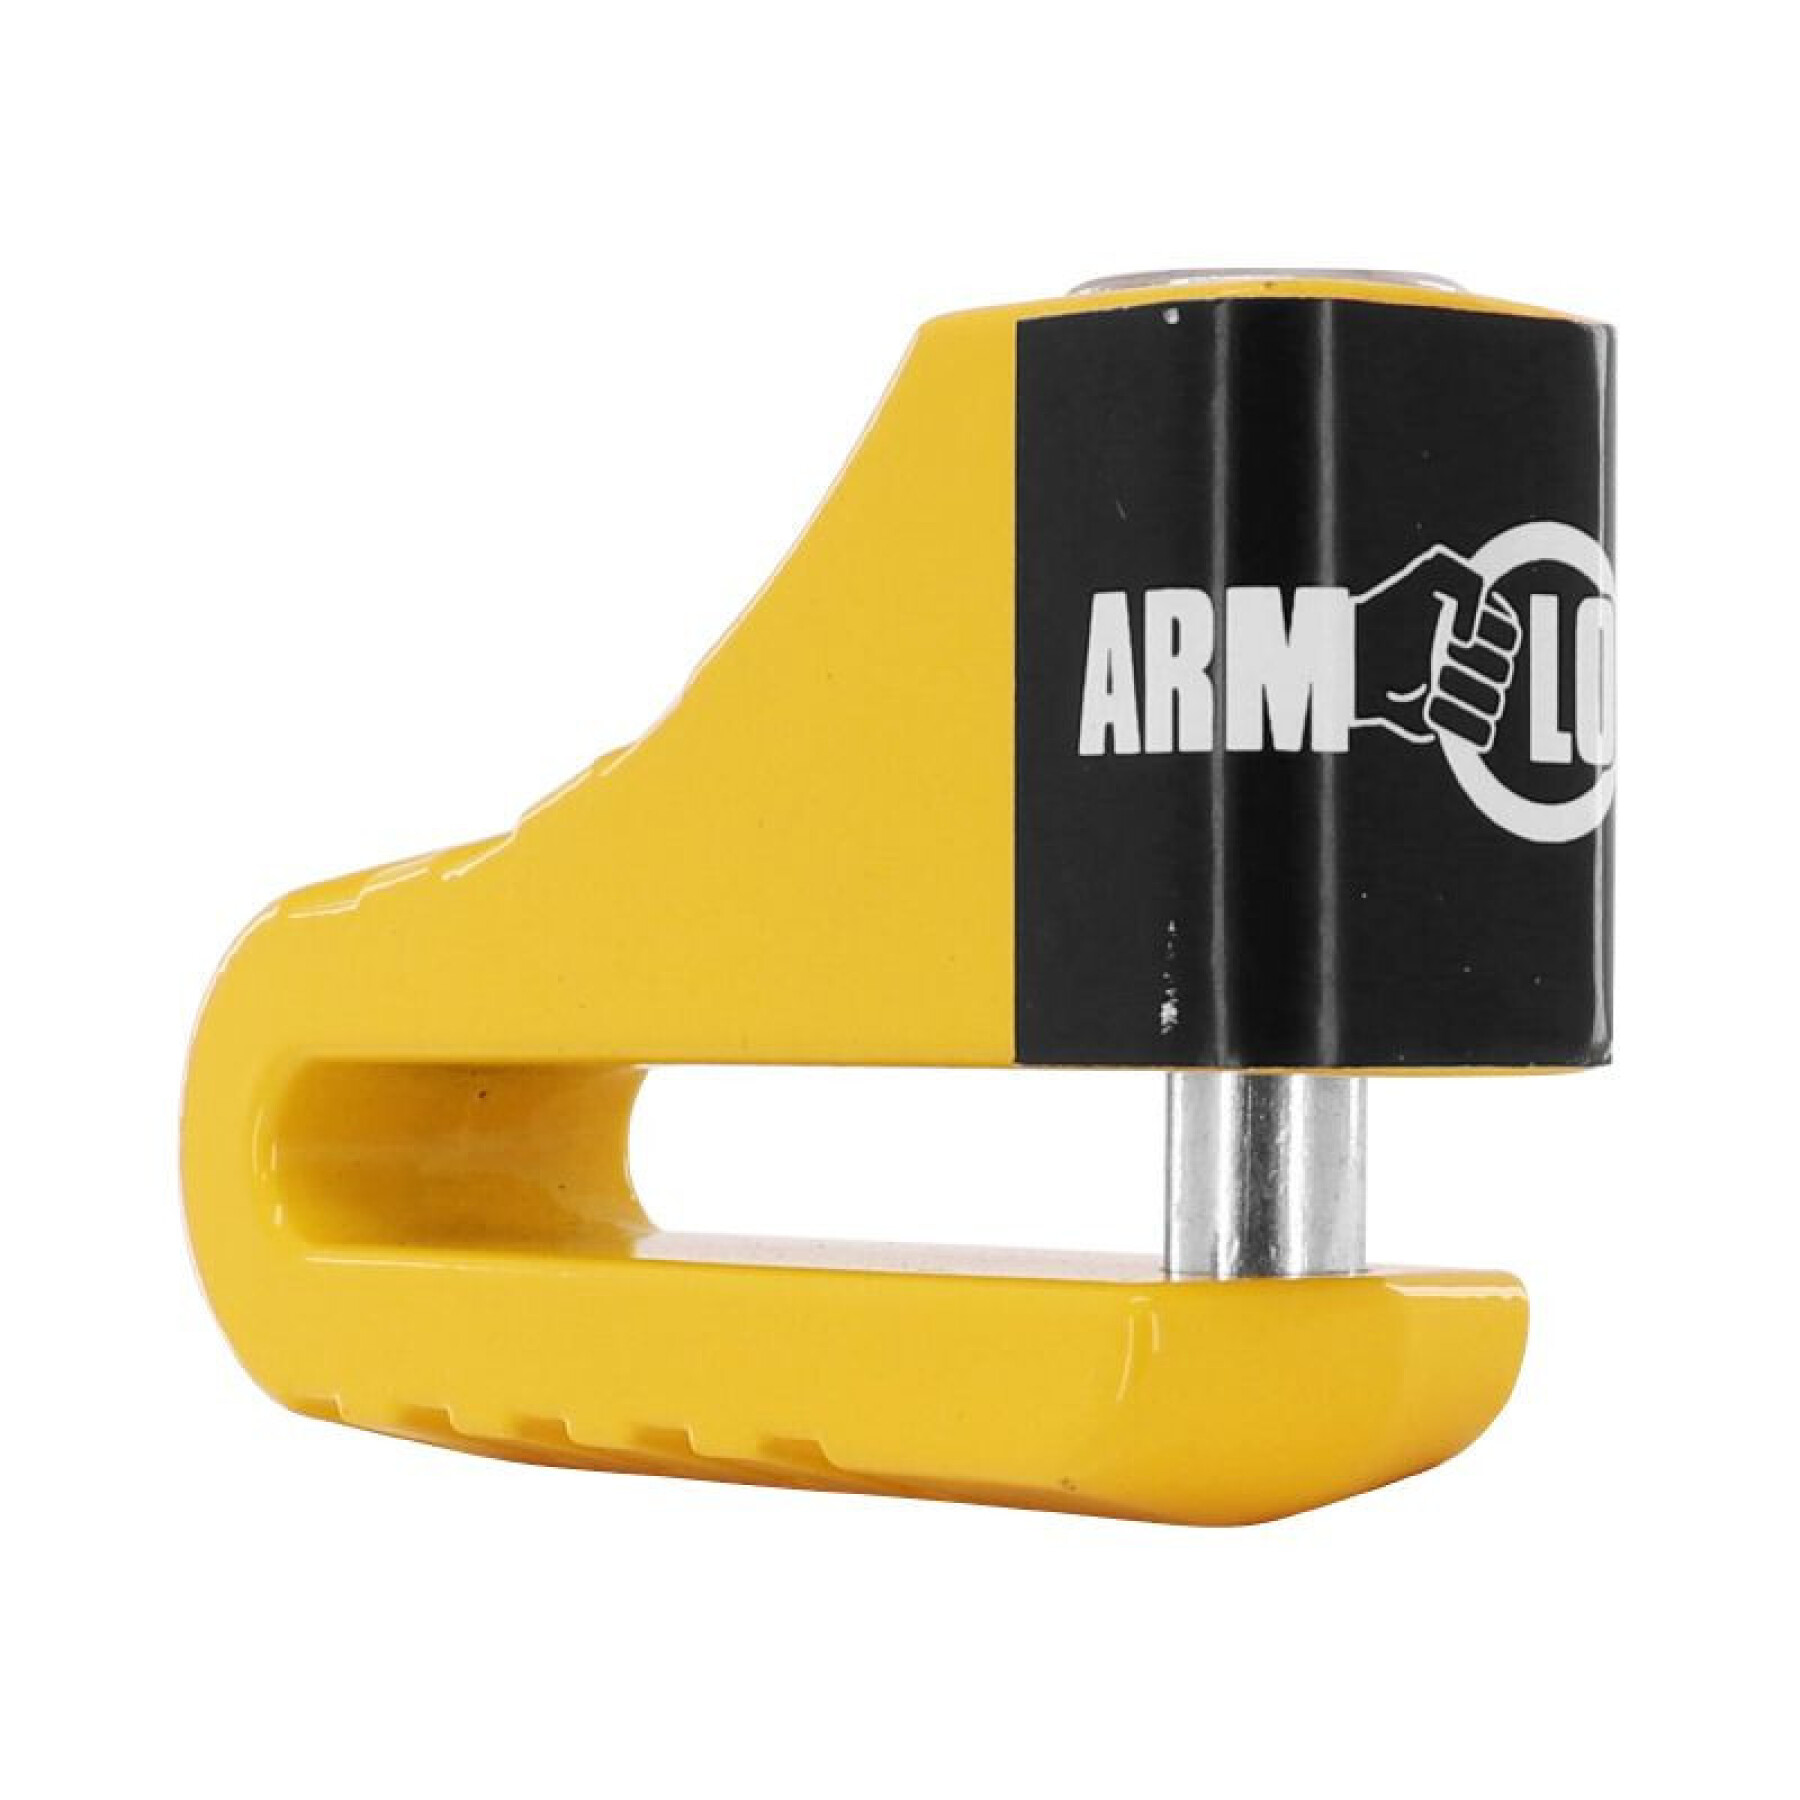 Schijfblokkering antidiefstalbeveiliging met tas Armlock